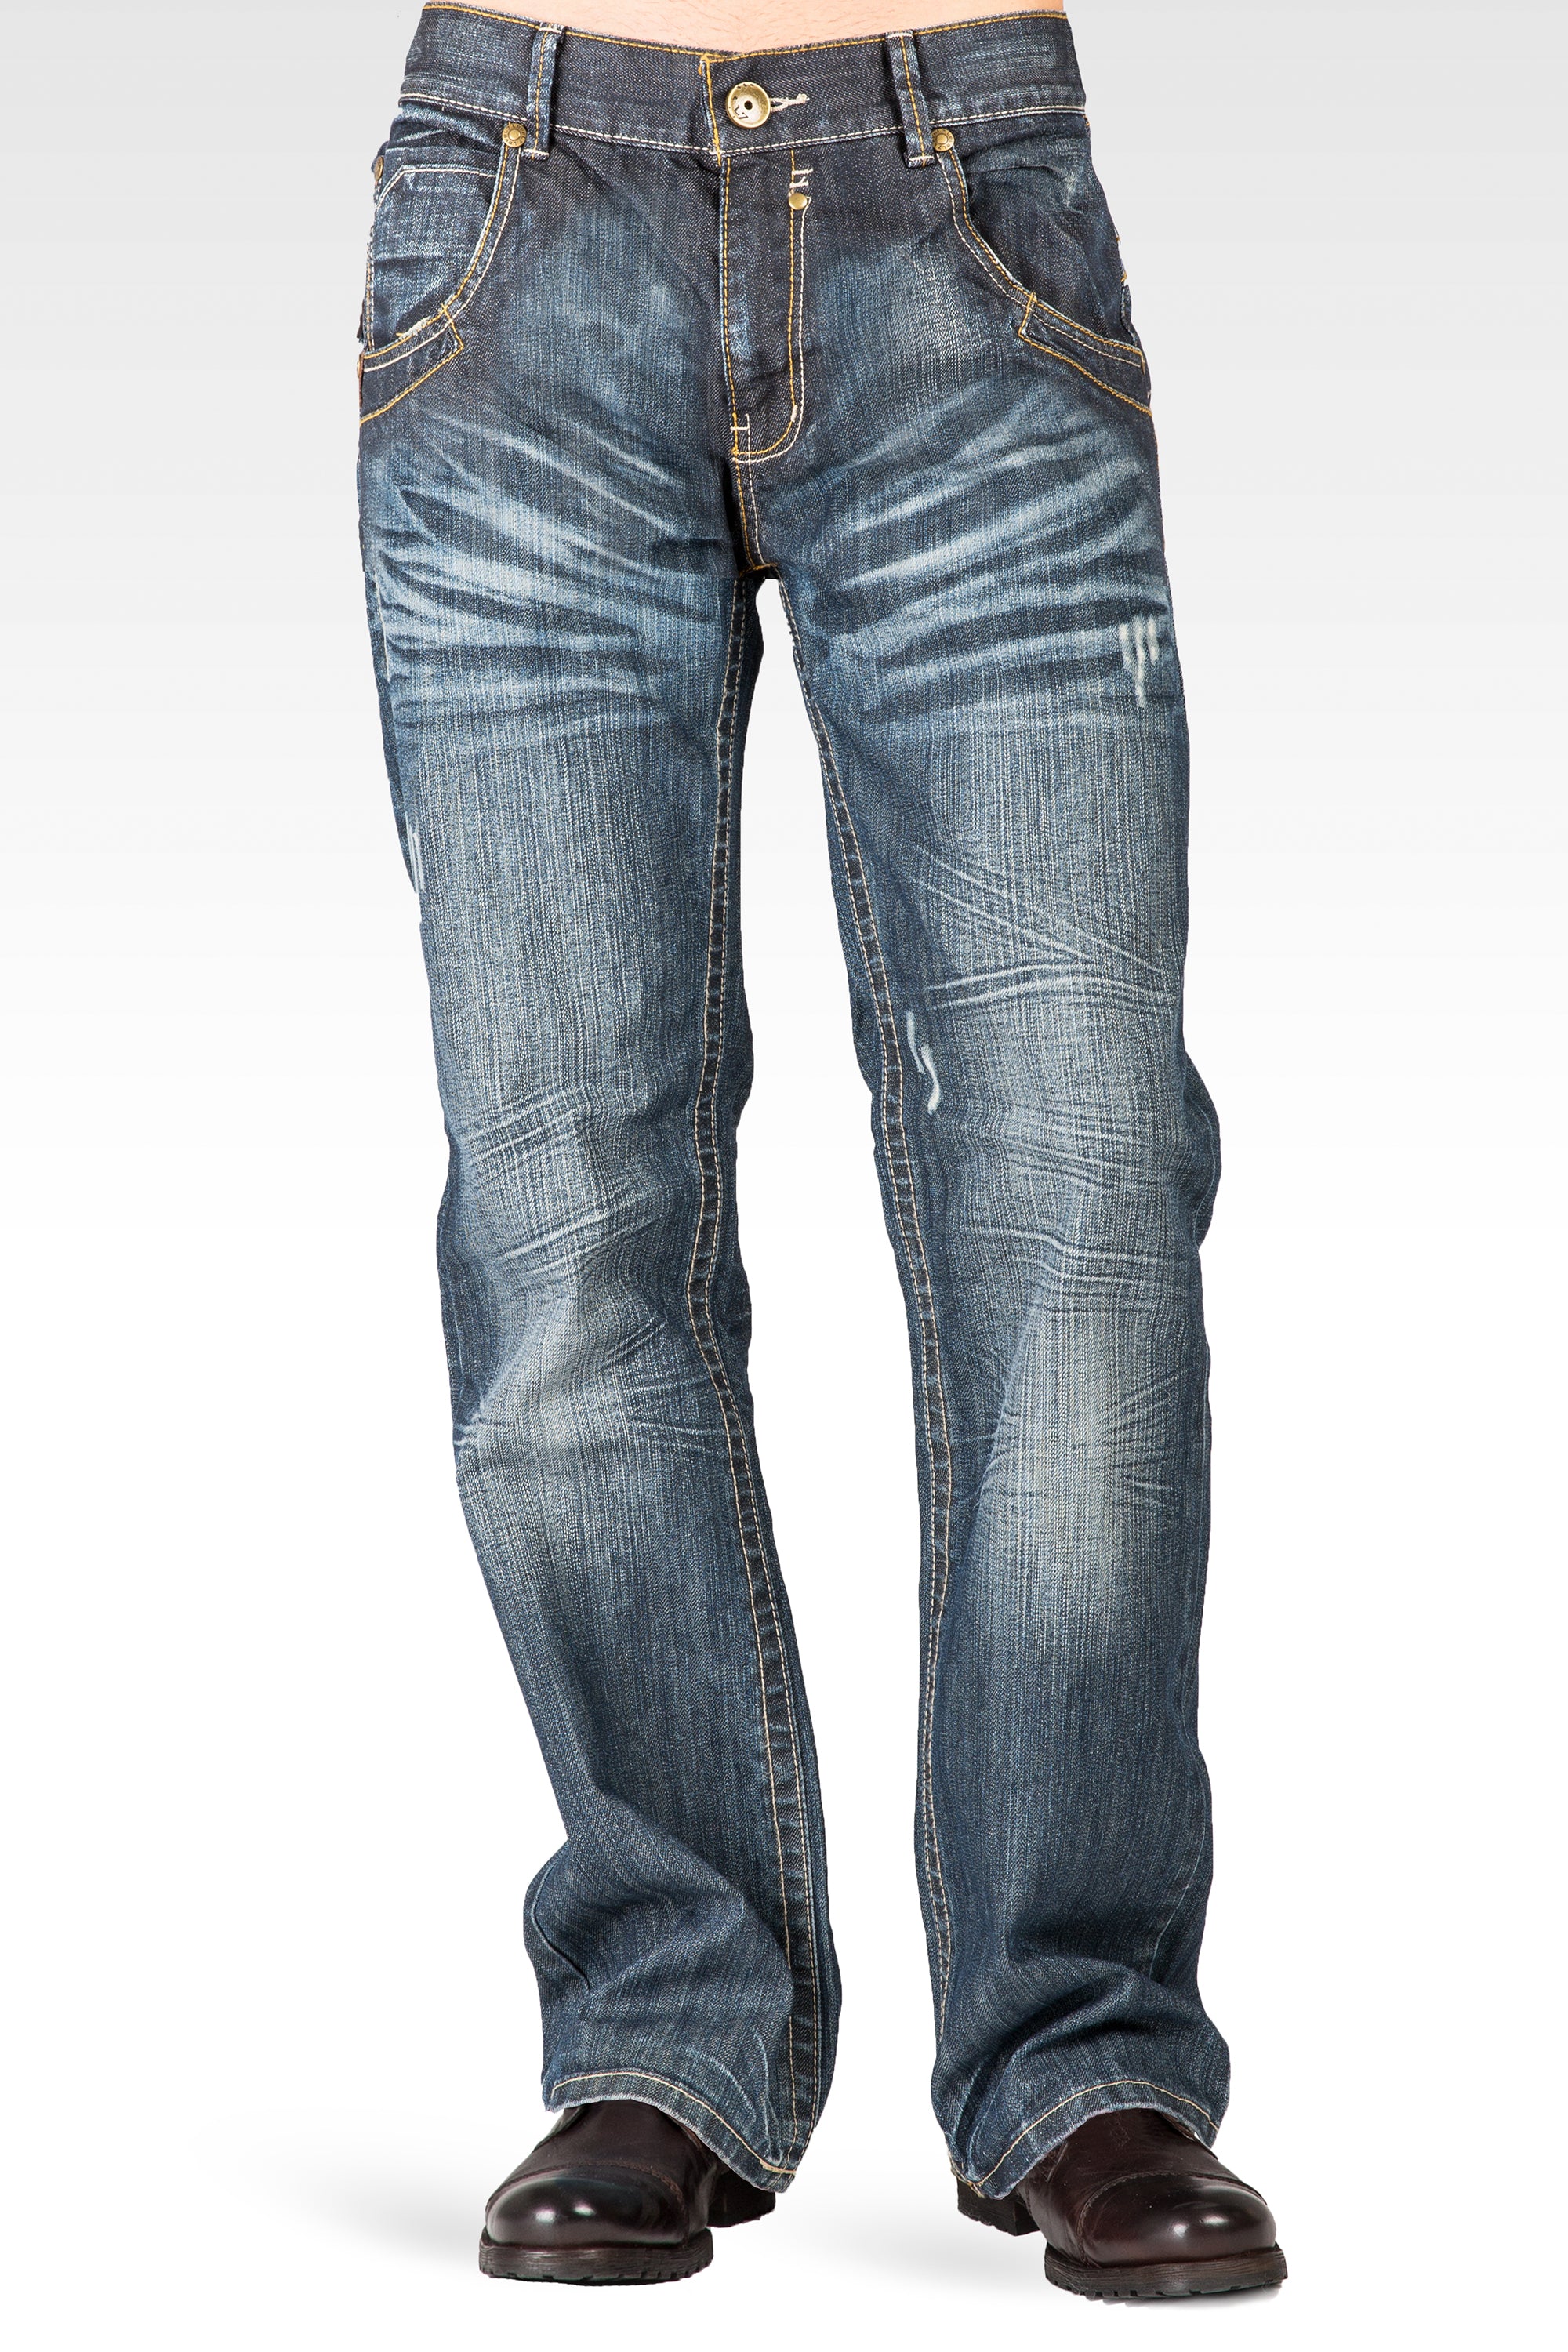 dwaas Bepalen erts Level 7 Men's Zipper Utility Pocket Relaxed Bootcut Distressed Jean Premium  Denim – Level 7 Jeans